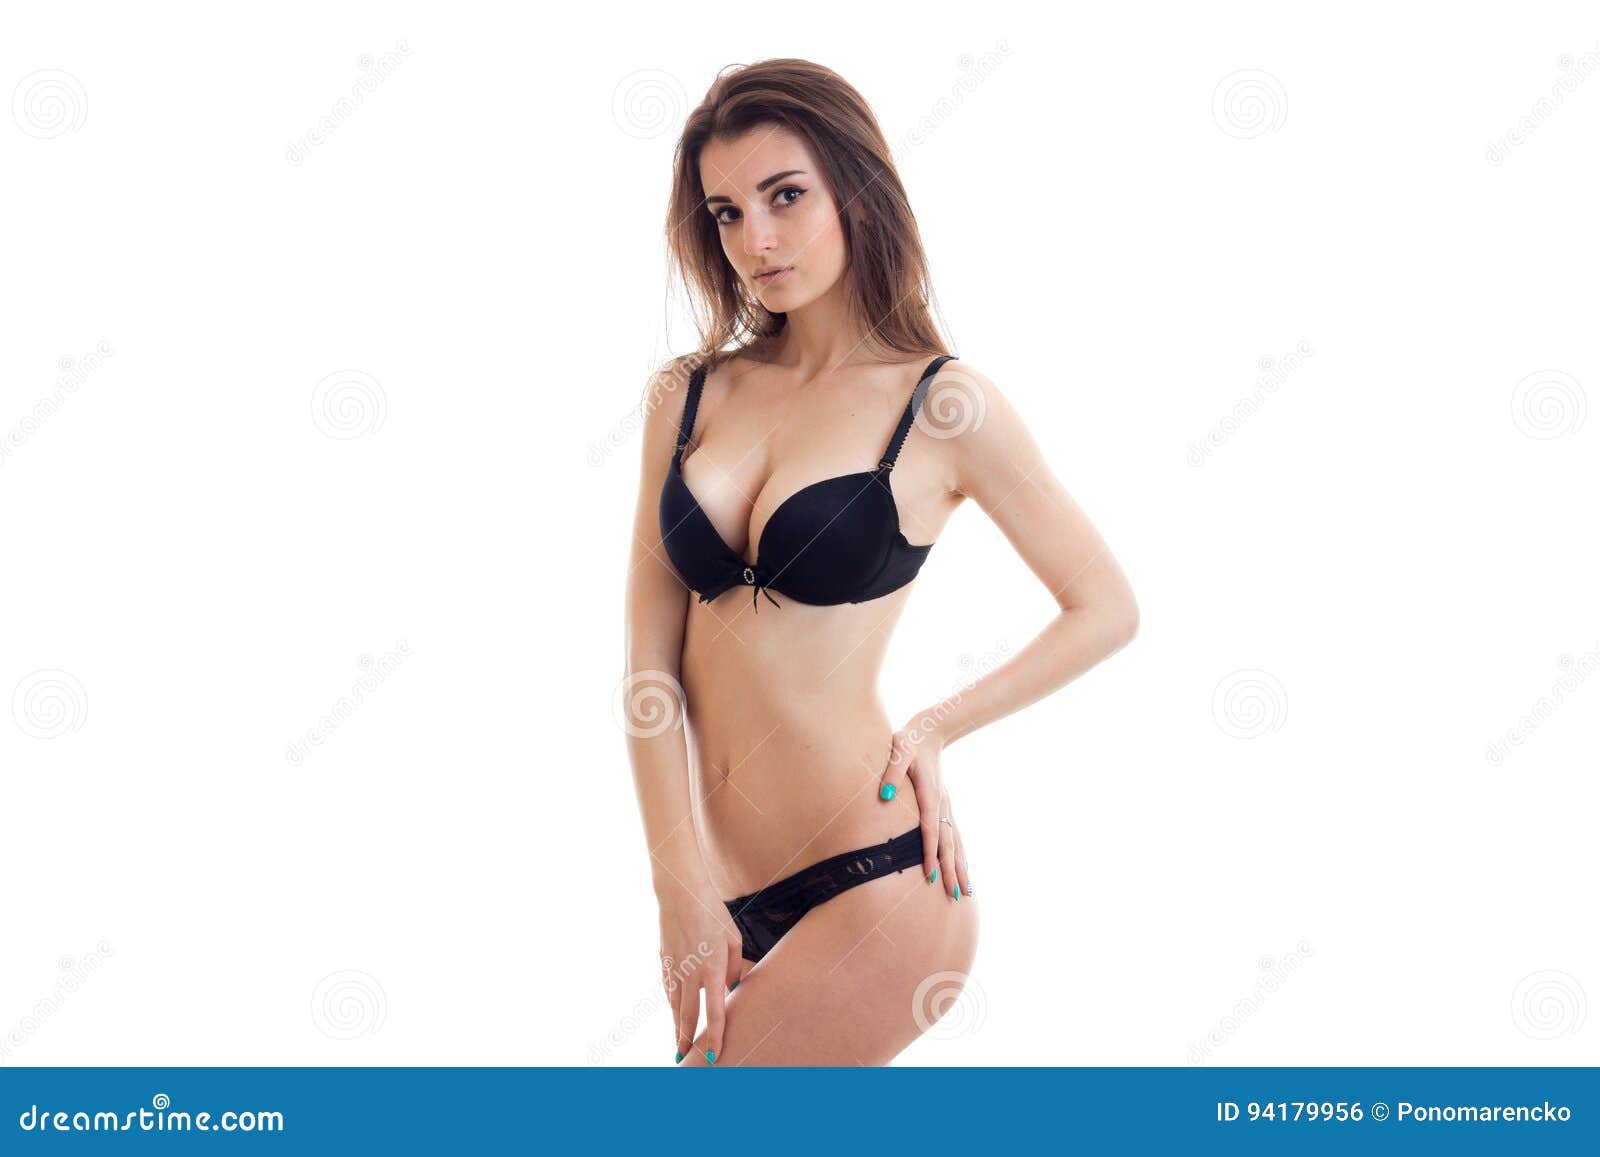 dana mackinnon recommends thin girl big breasts pic